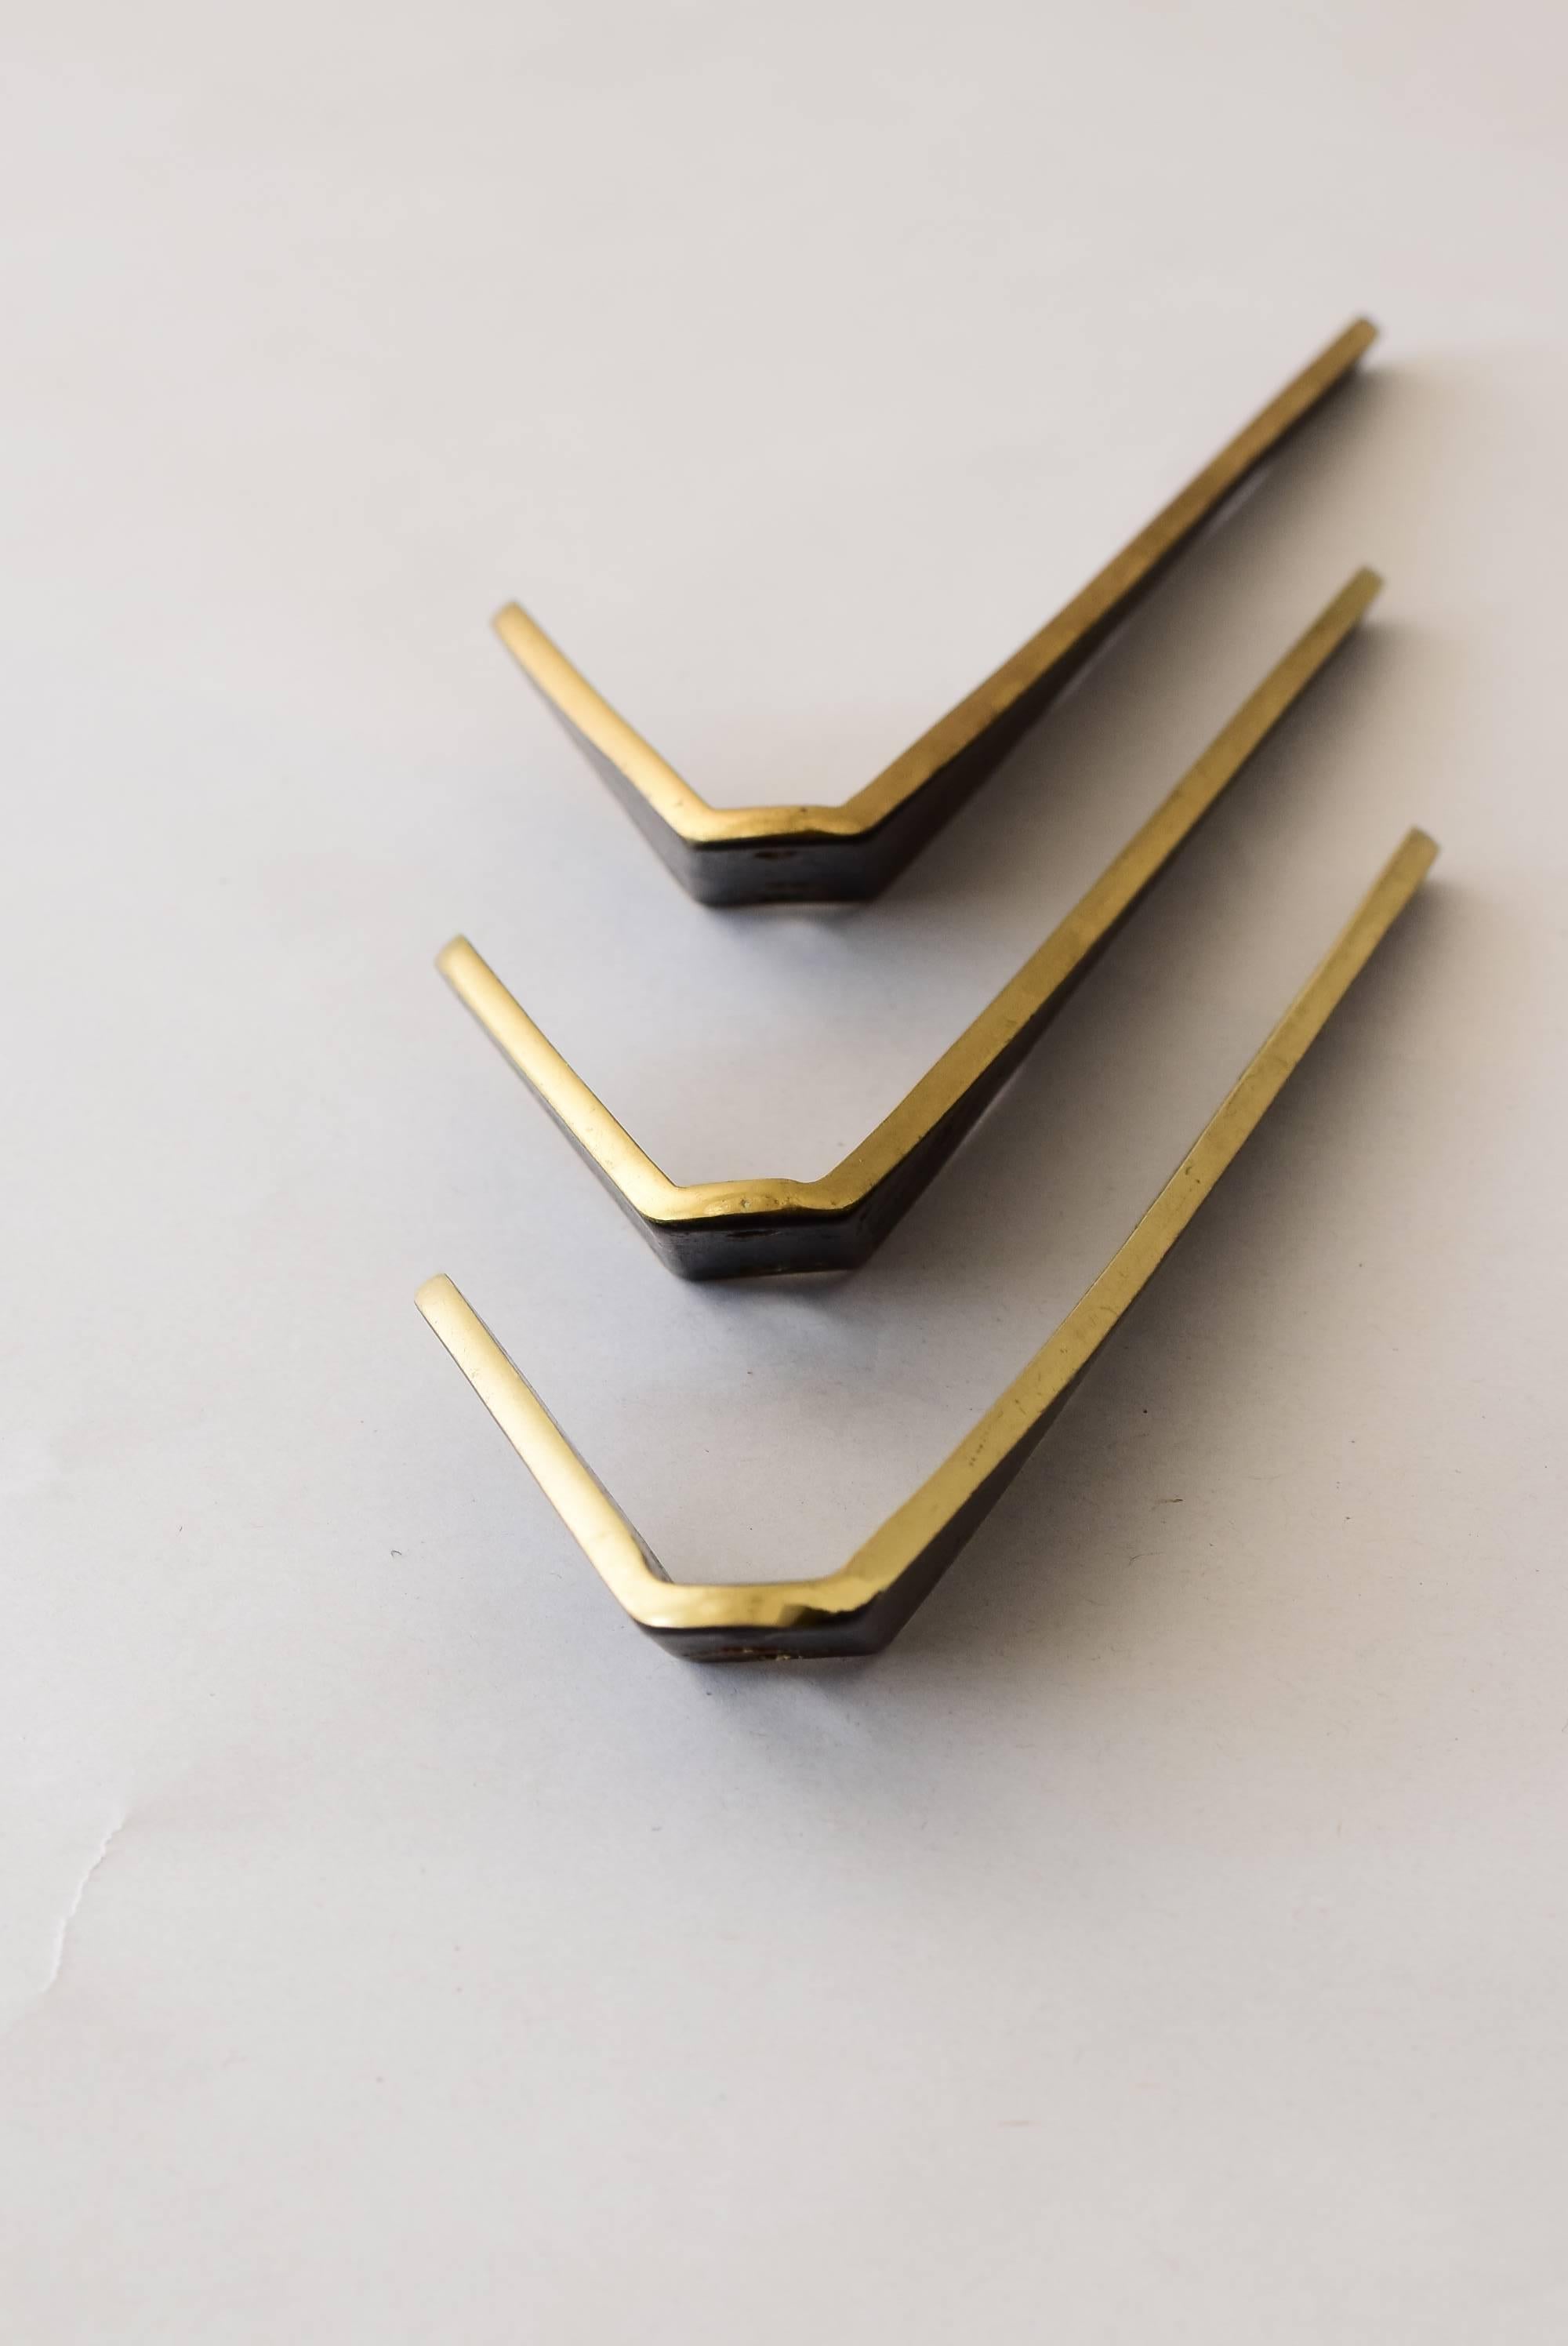 Three asymmetric modernist brass wall hooks by Walter Bosse, Austria, 1950s.

Original condition.